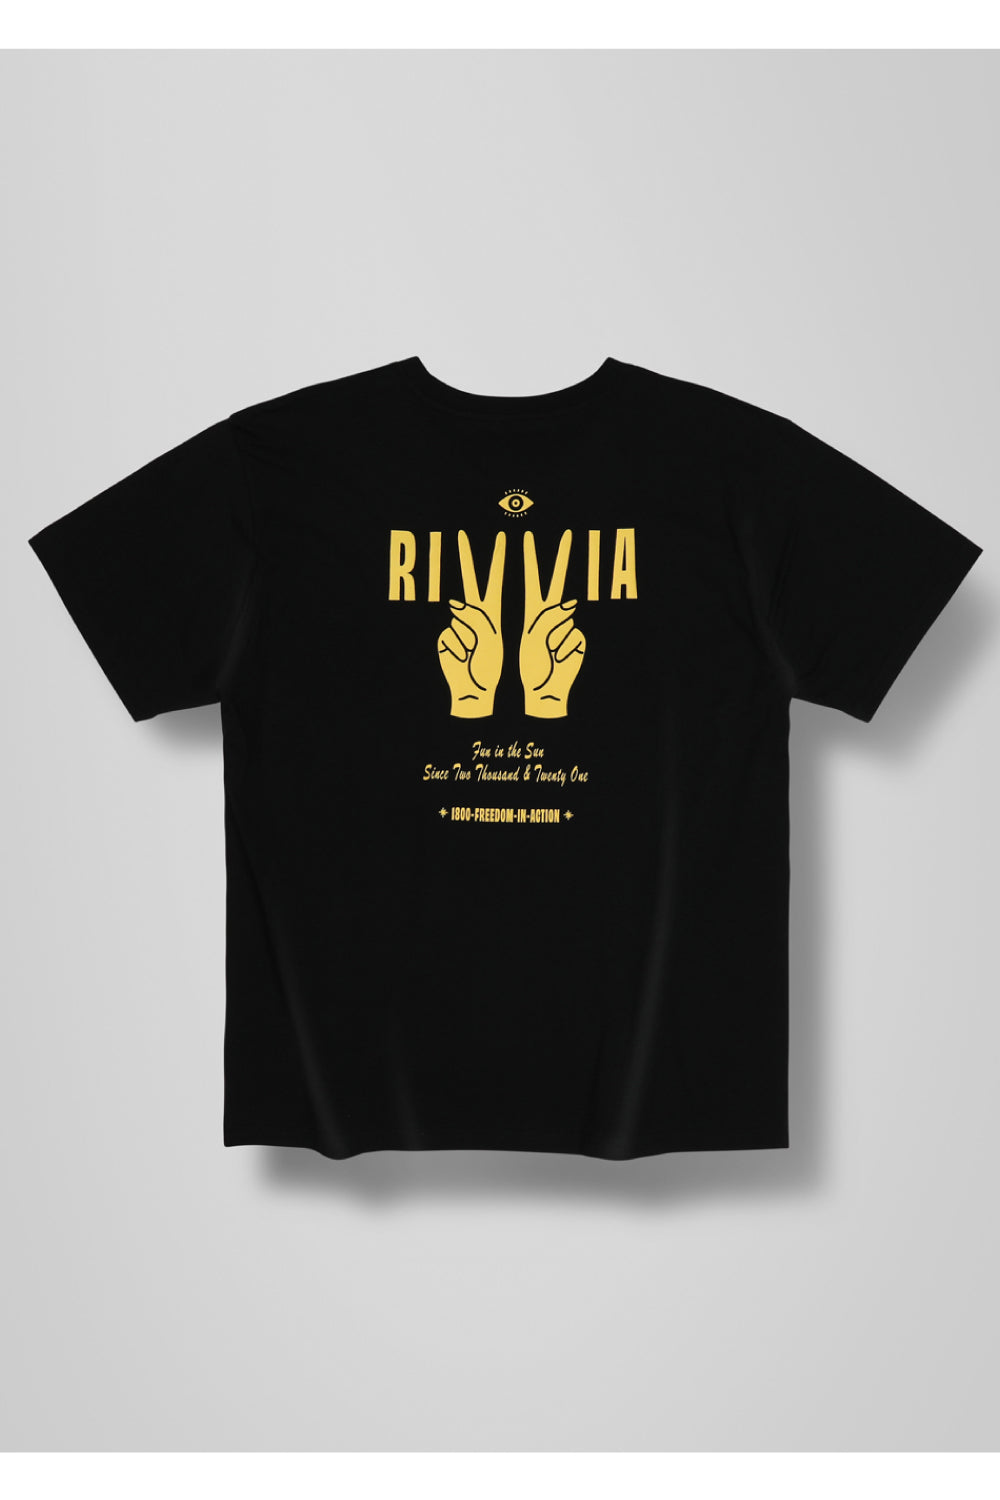 Rivvia Projects 1800 T-shirt